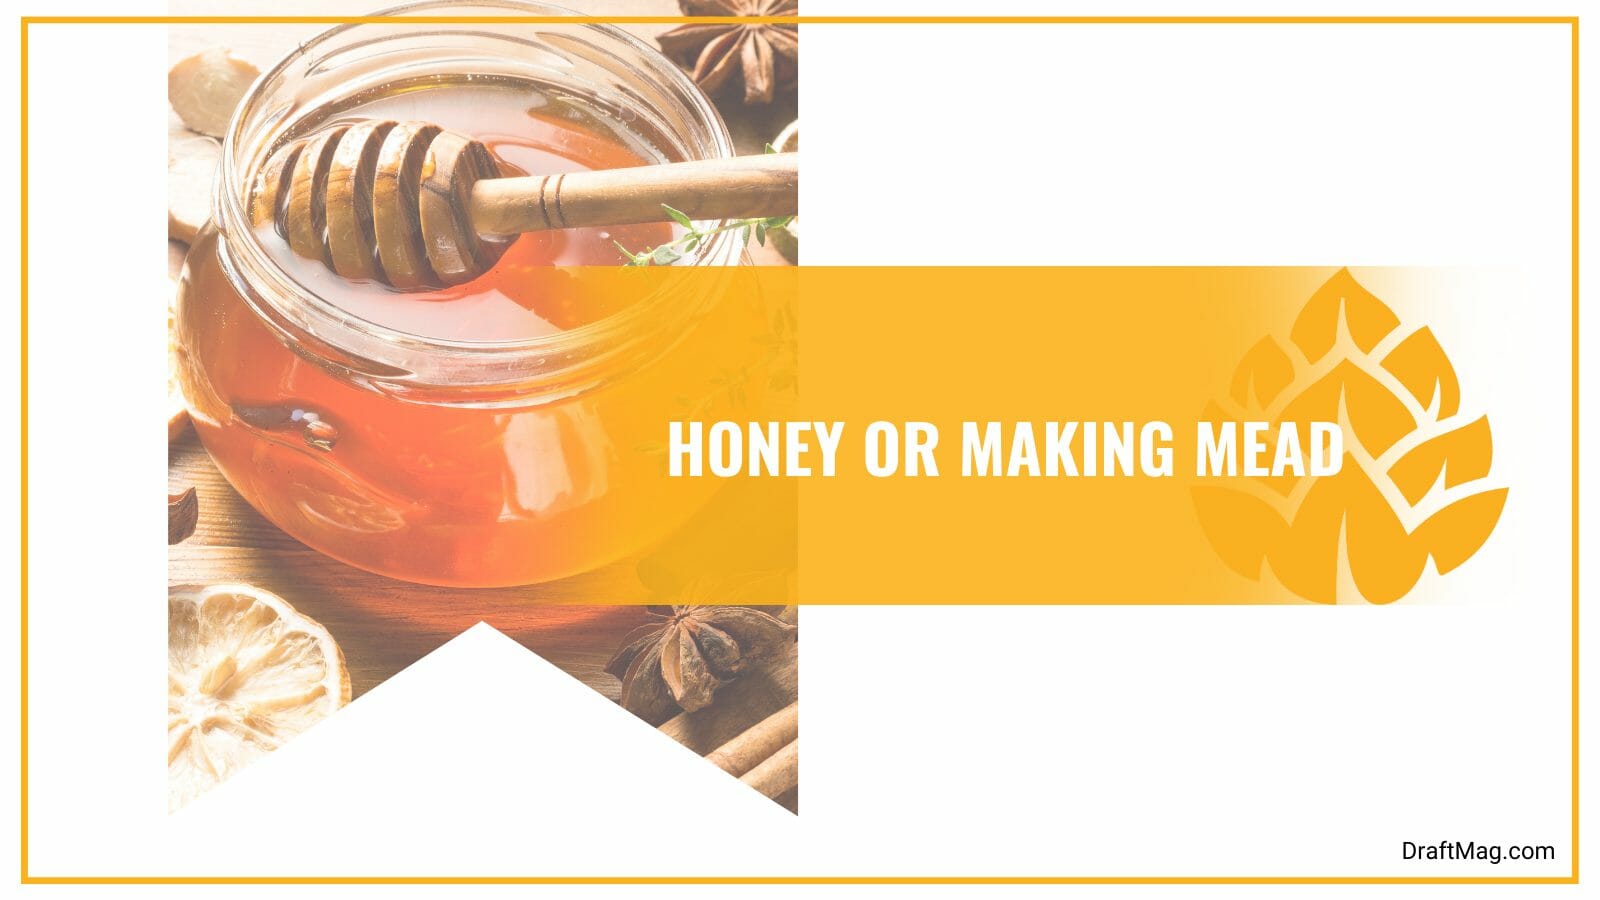 Best Honey or Making Mead